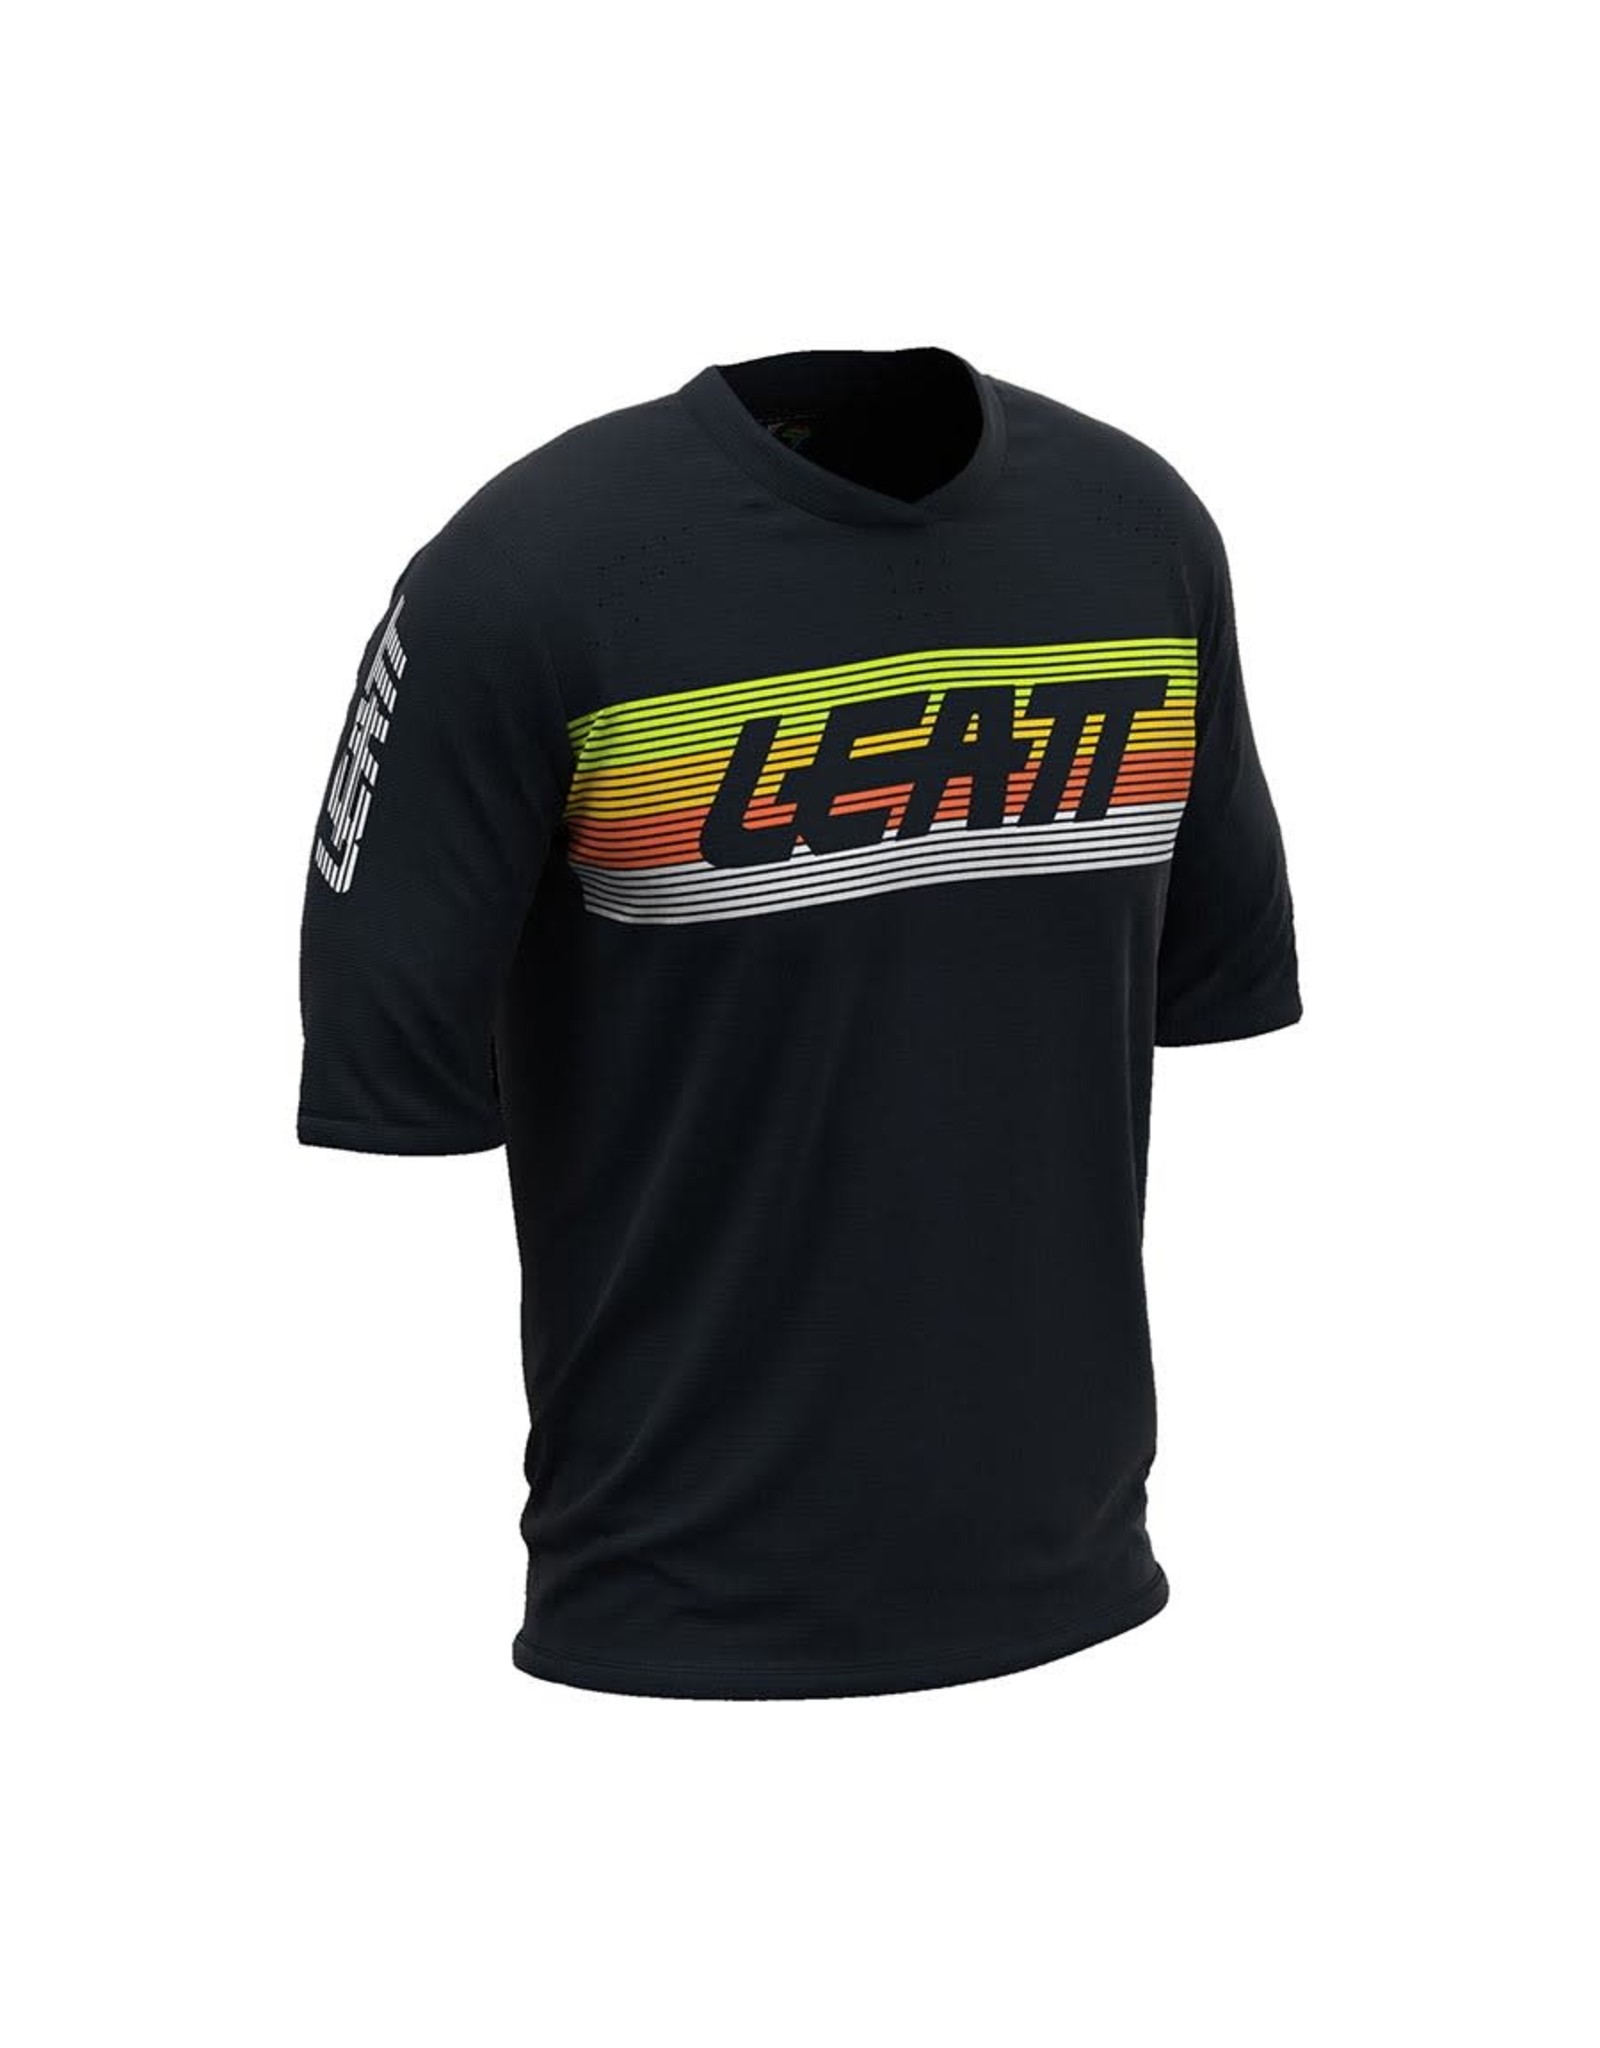 Leatt Leatt  MTB Enduro 3.0  Jersey  3/4 Sleeves  Men